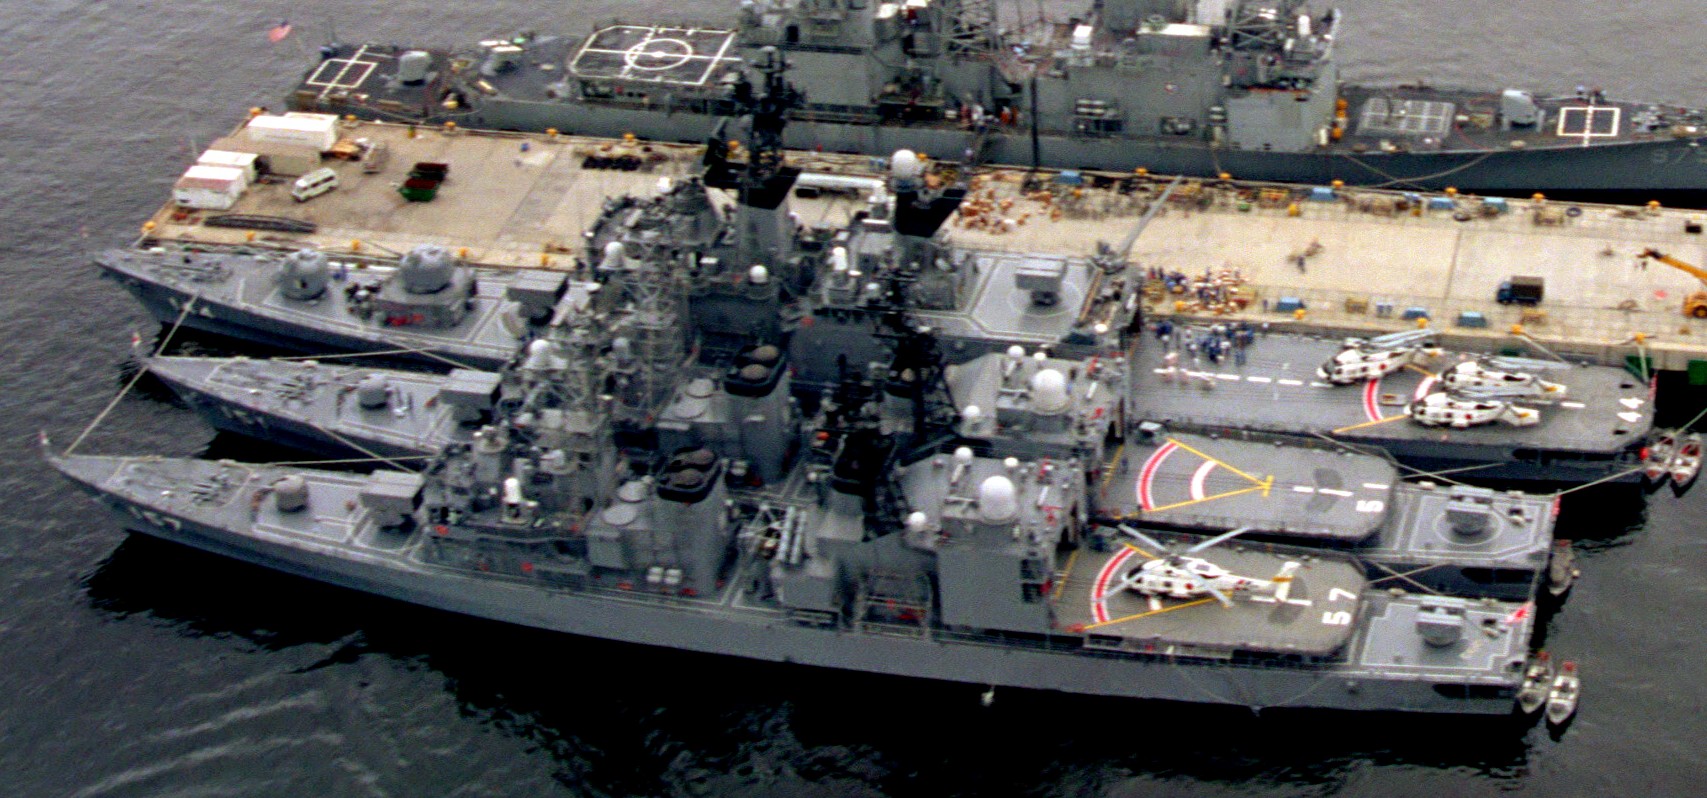 dd-151 jds asagiri class destroyer japan maritime self defense force jmsdf 15x